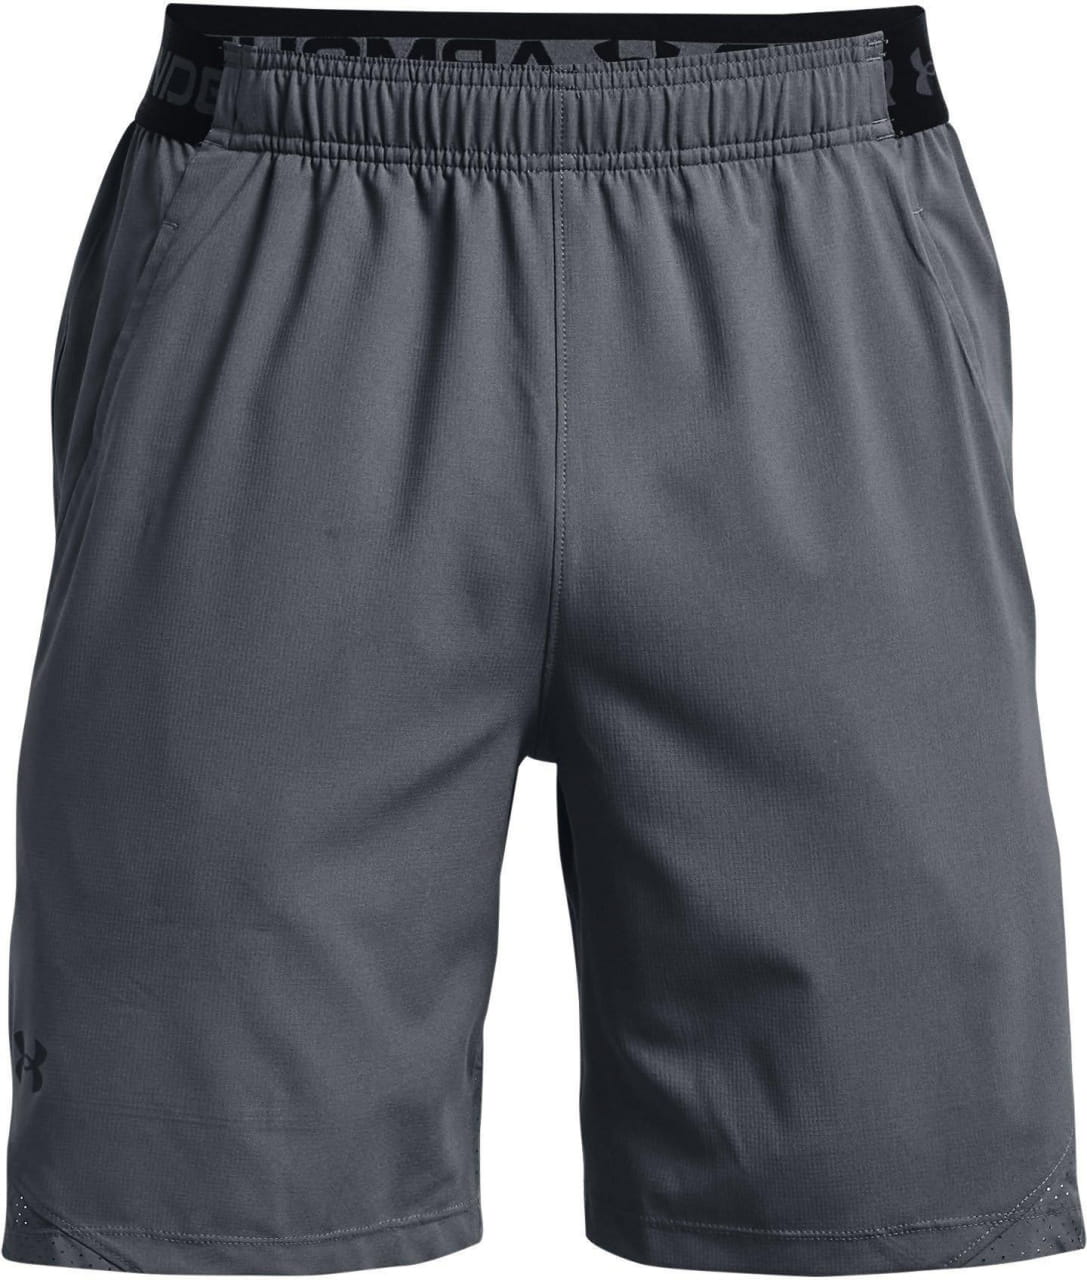 Shorts de sport pour hommes Under Armour Vanish Woven 8in Shorts-GRY